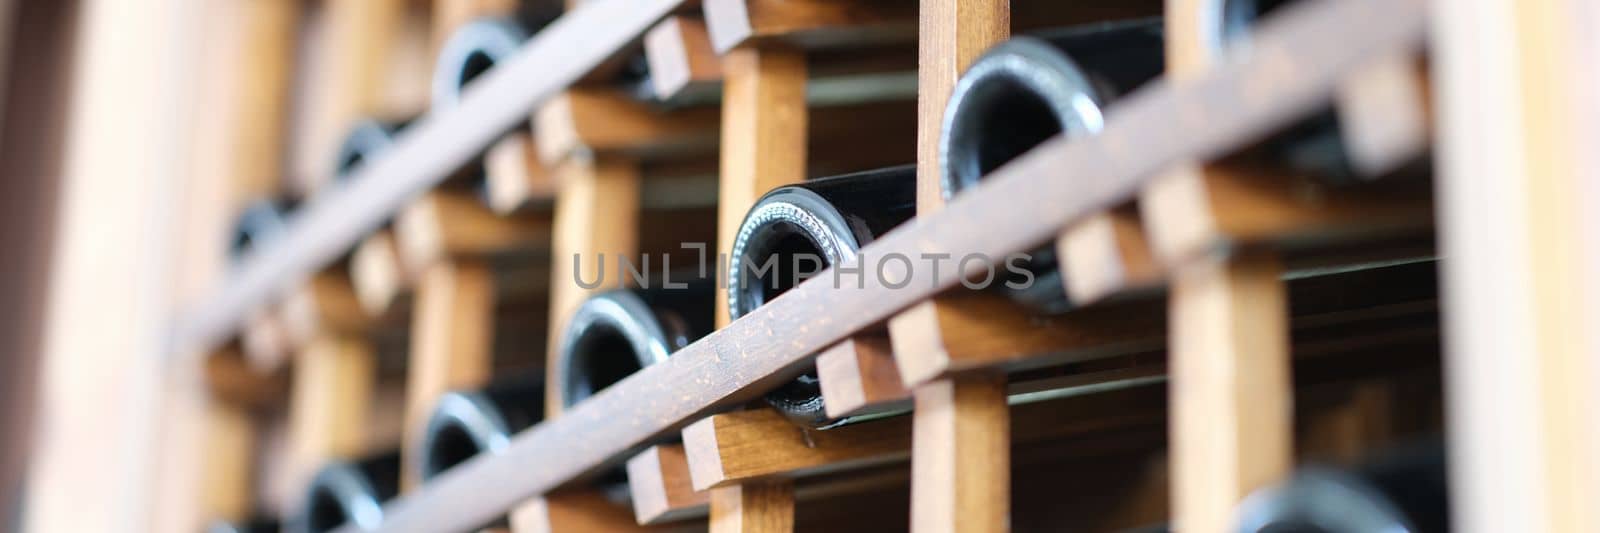 Many wine bottles in wine cellar closeup by kuprevich